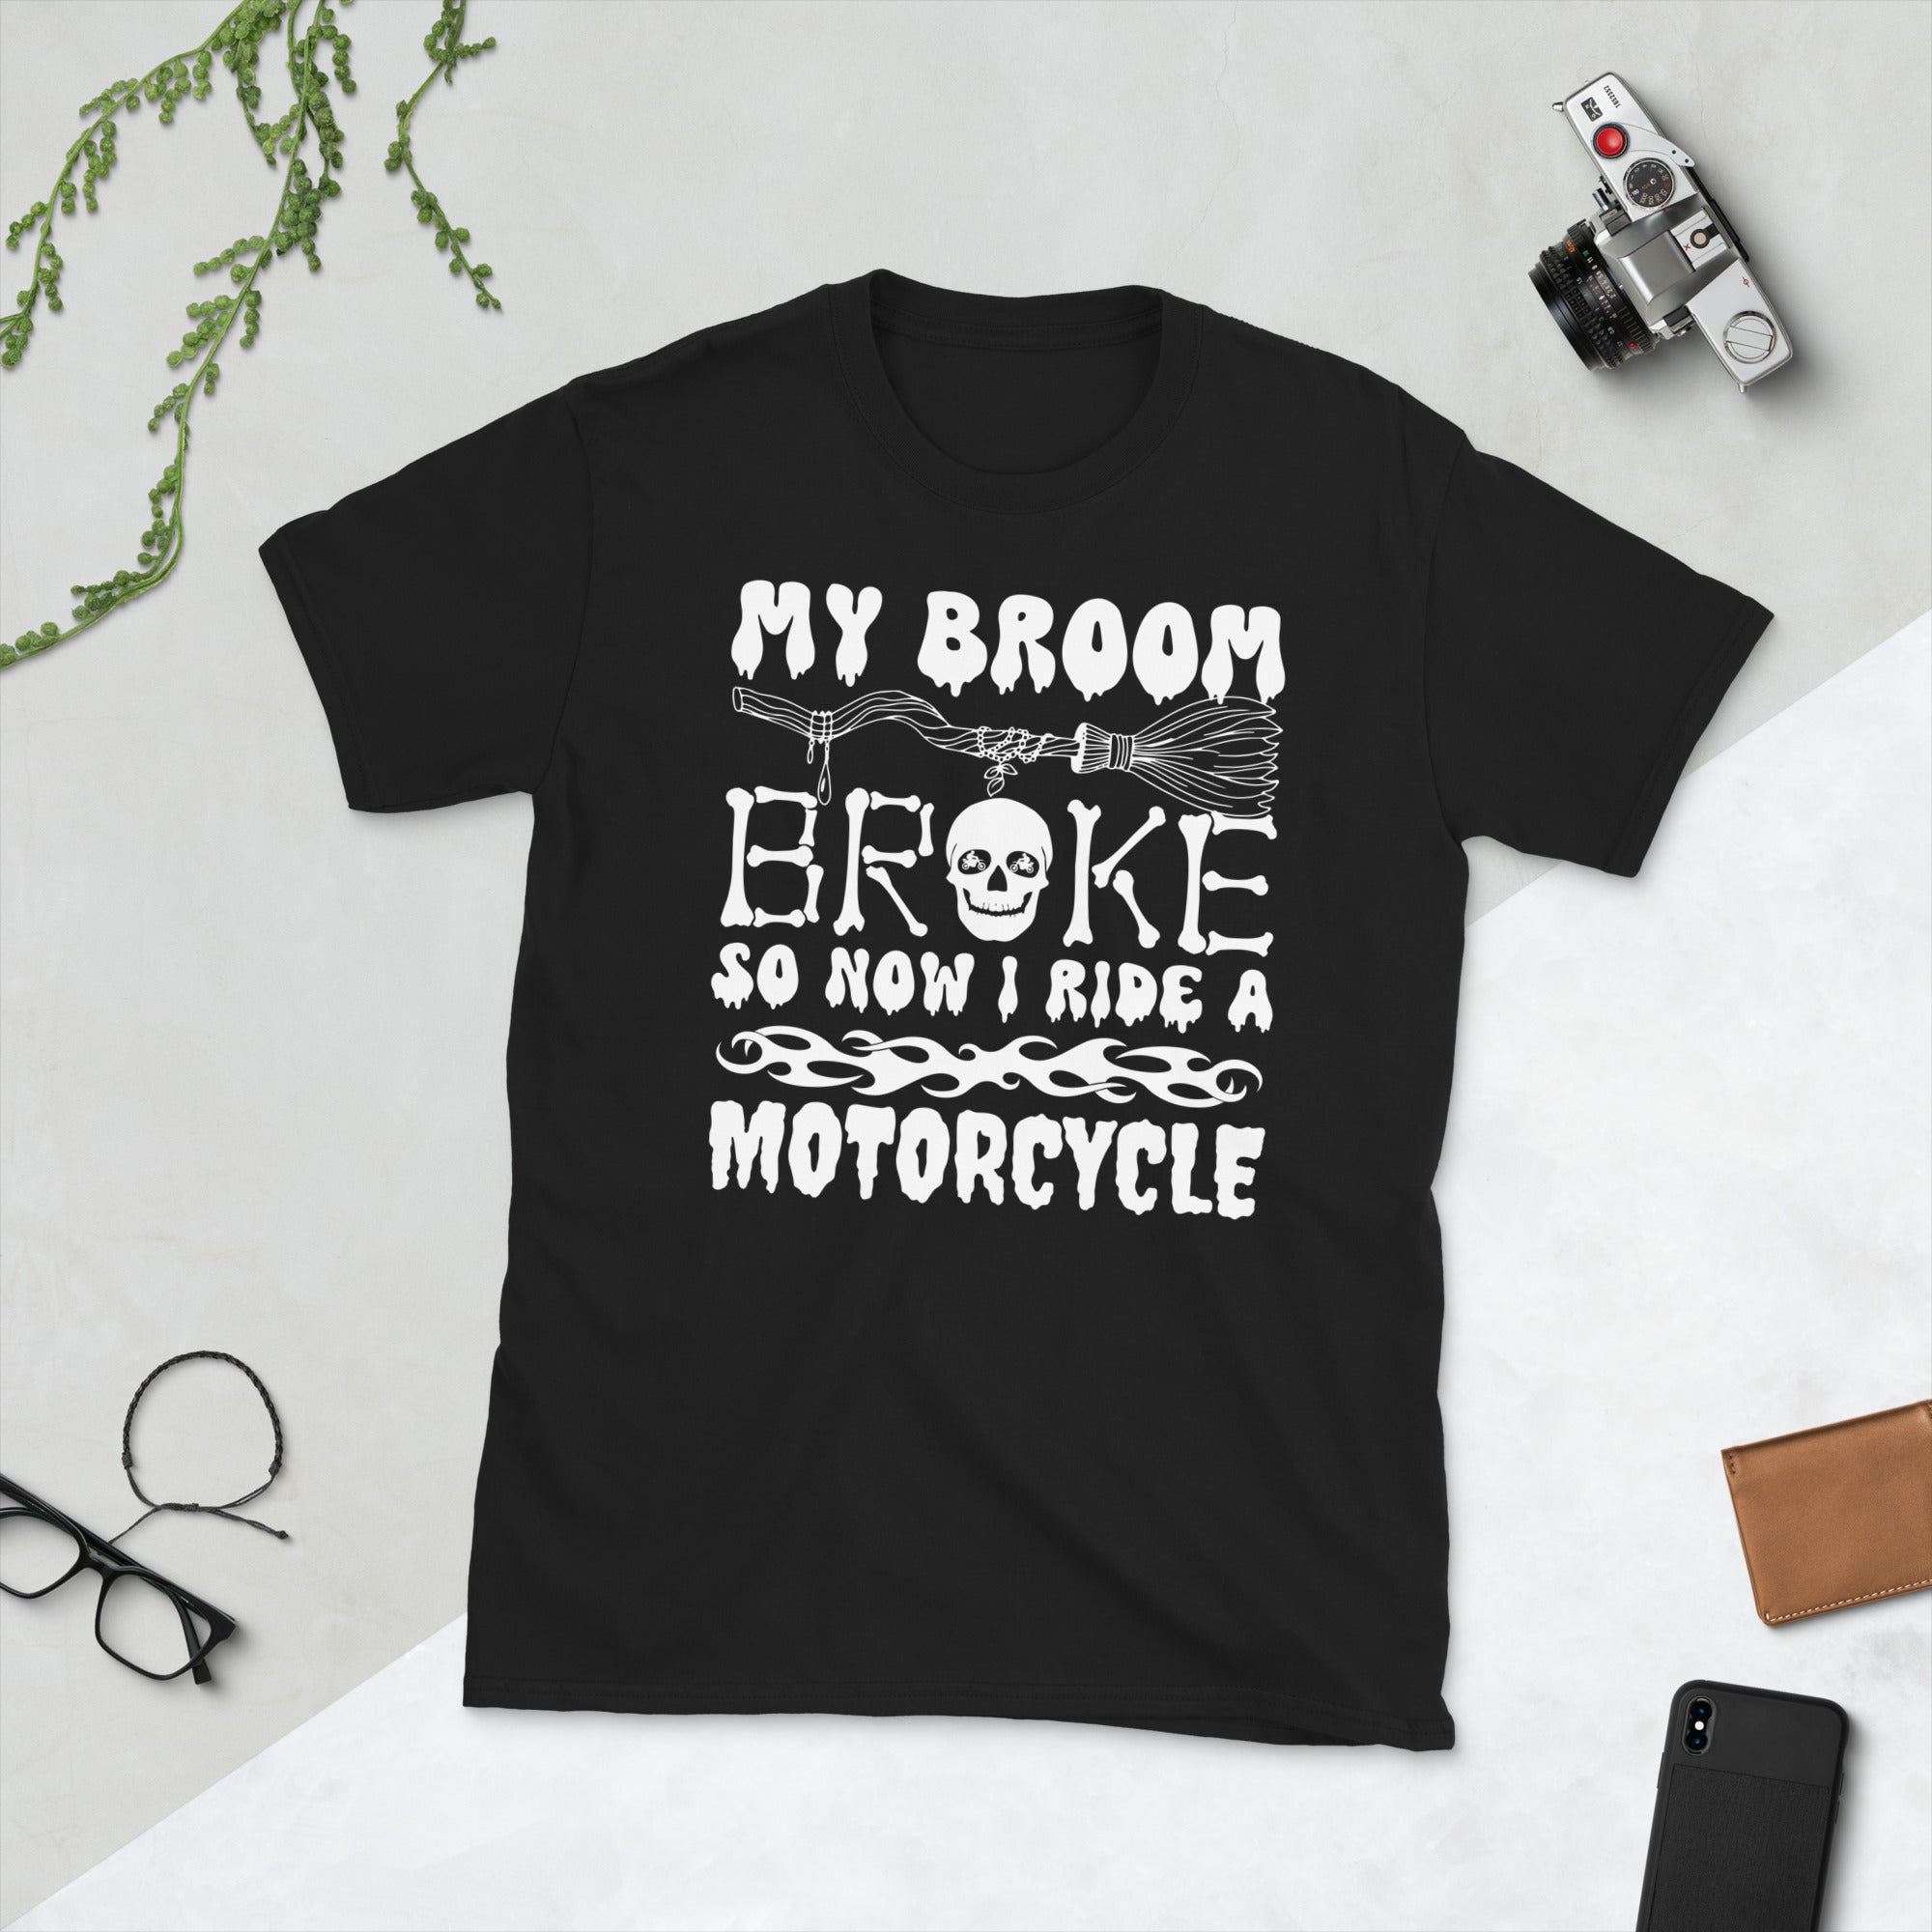 My Broom Broke So Now I Ride a Motorcycle, Funny Halloween Biker Shirt, Halloween Party Costume For Bikers, Retro Biker Dad Tshirt Halloween